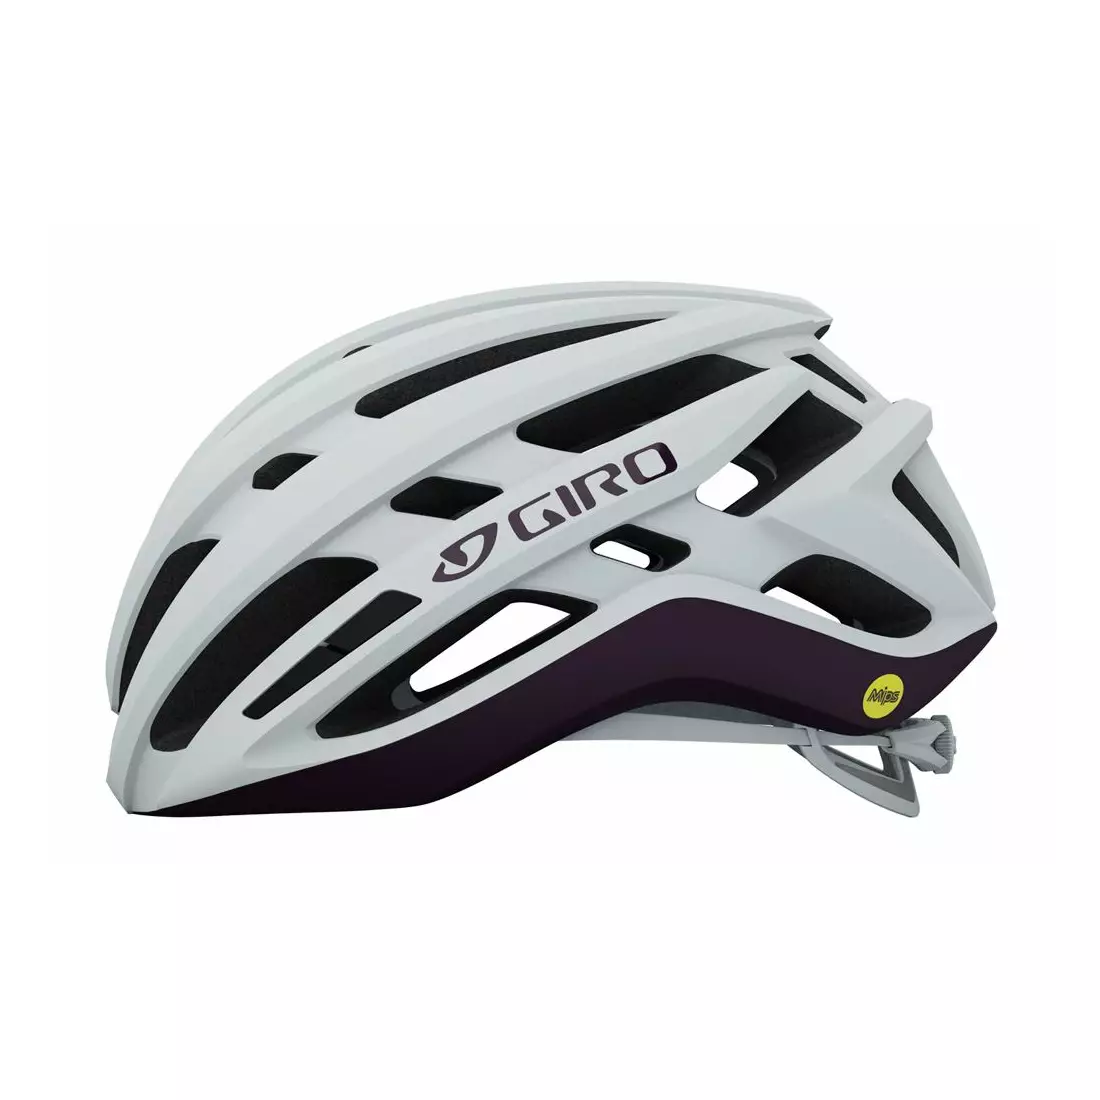 GIRO AGILIS INTEGRATED MIPS Women's Series road bike helmet, matte white urchin